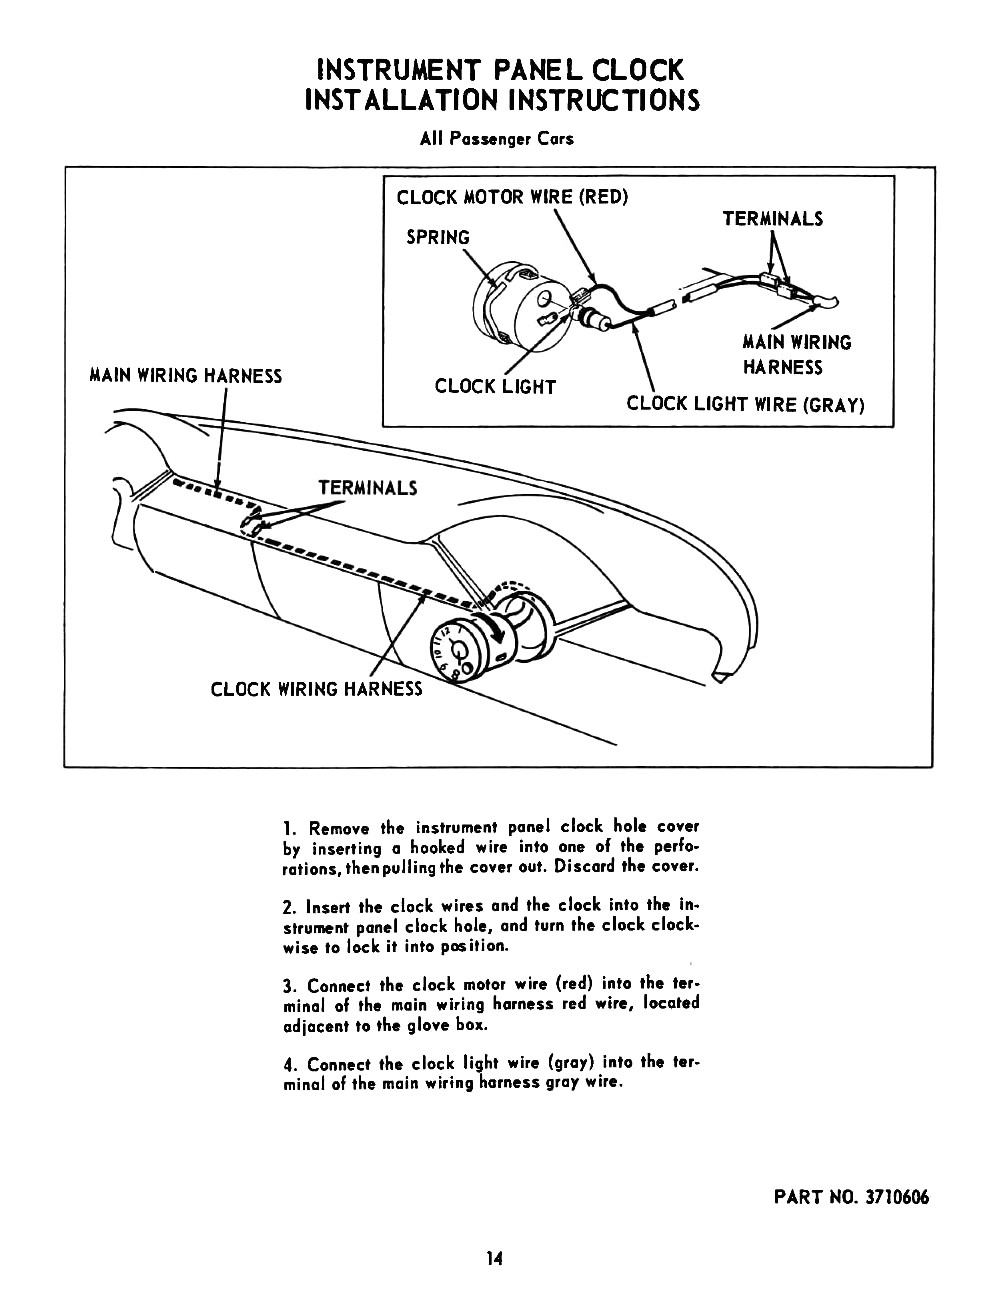 1955_Chevrolet_Acc_Manual-14